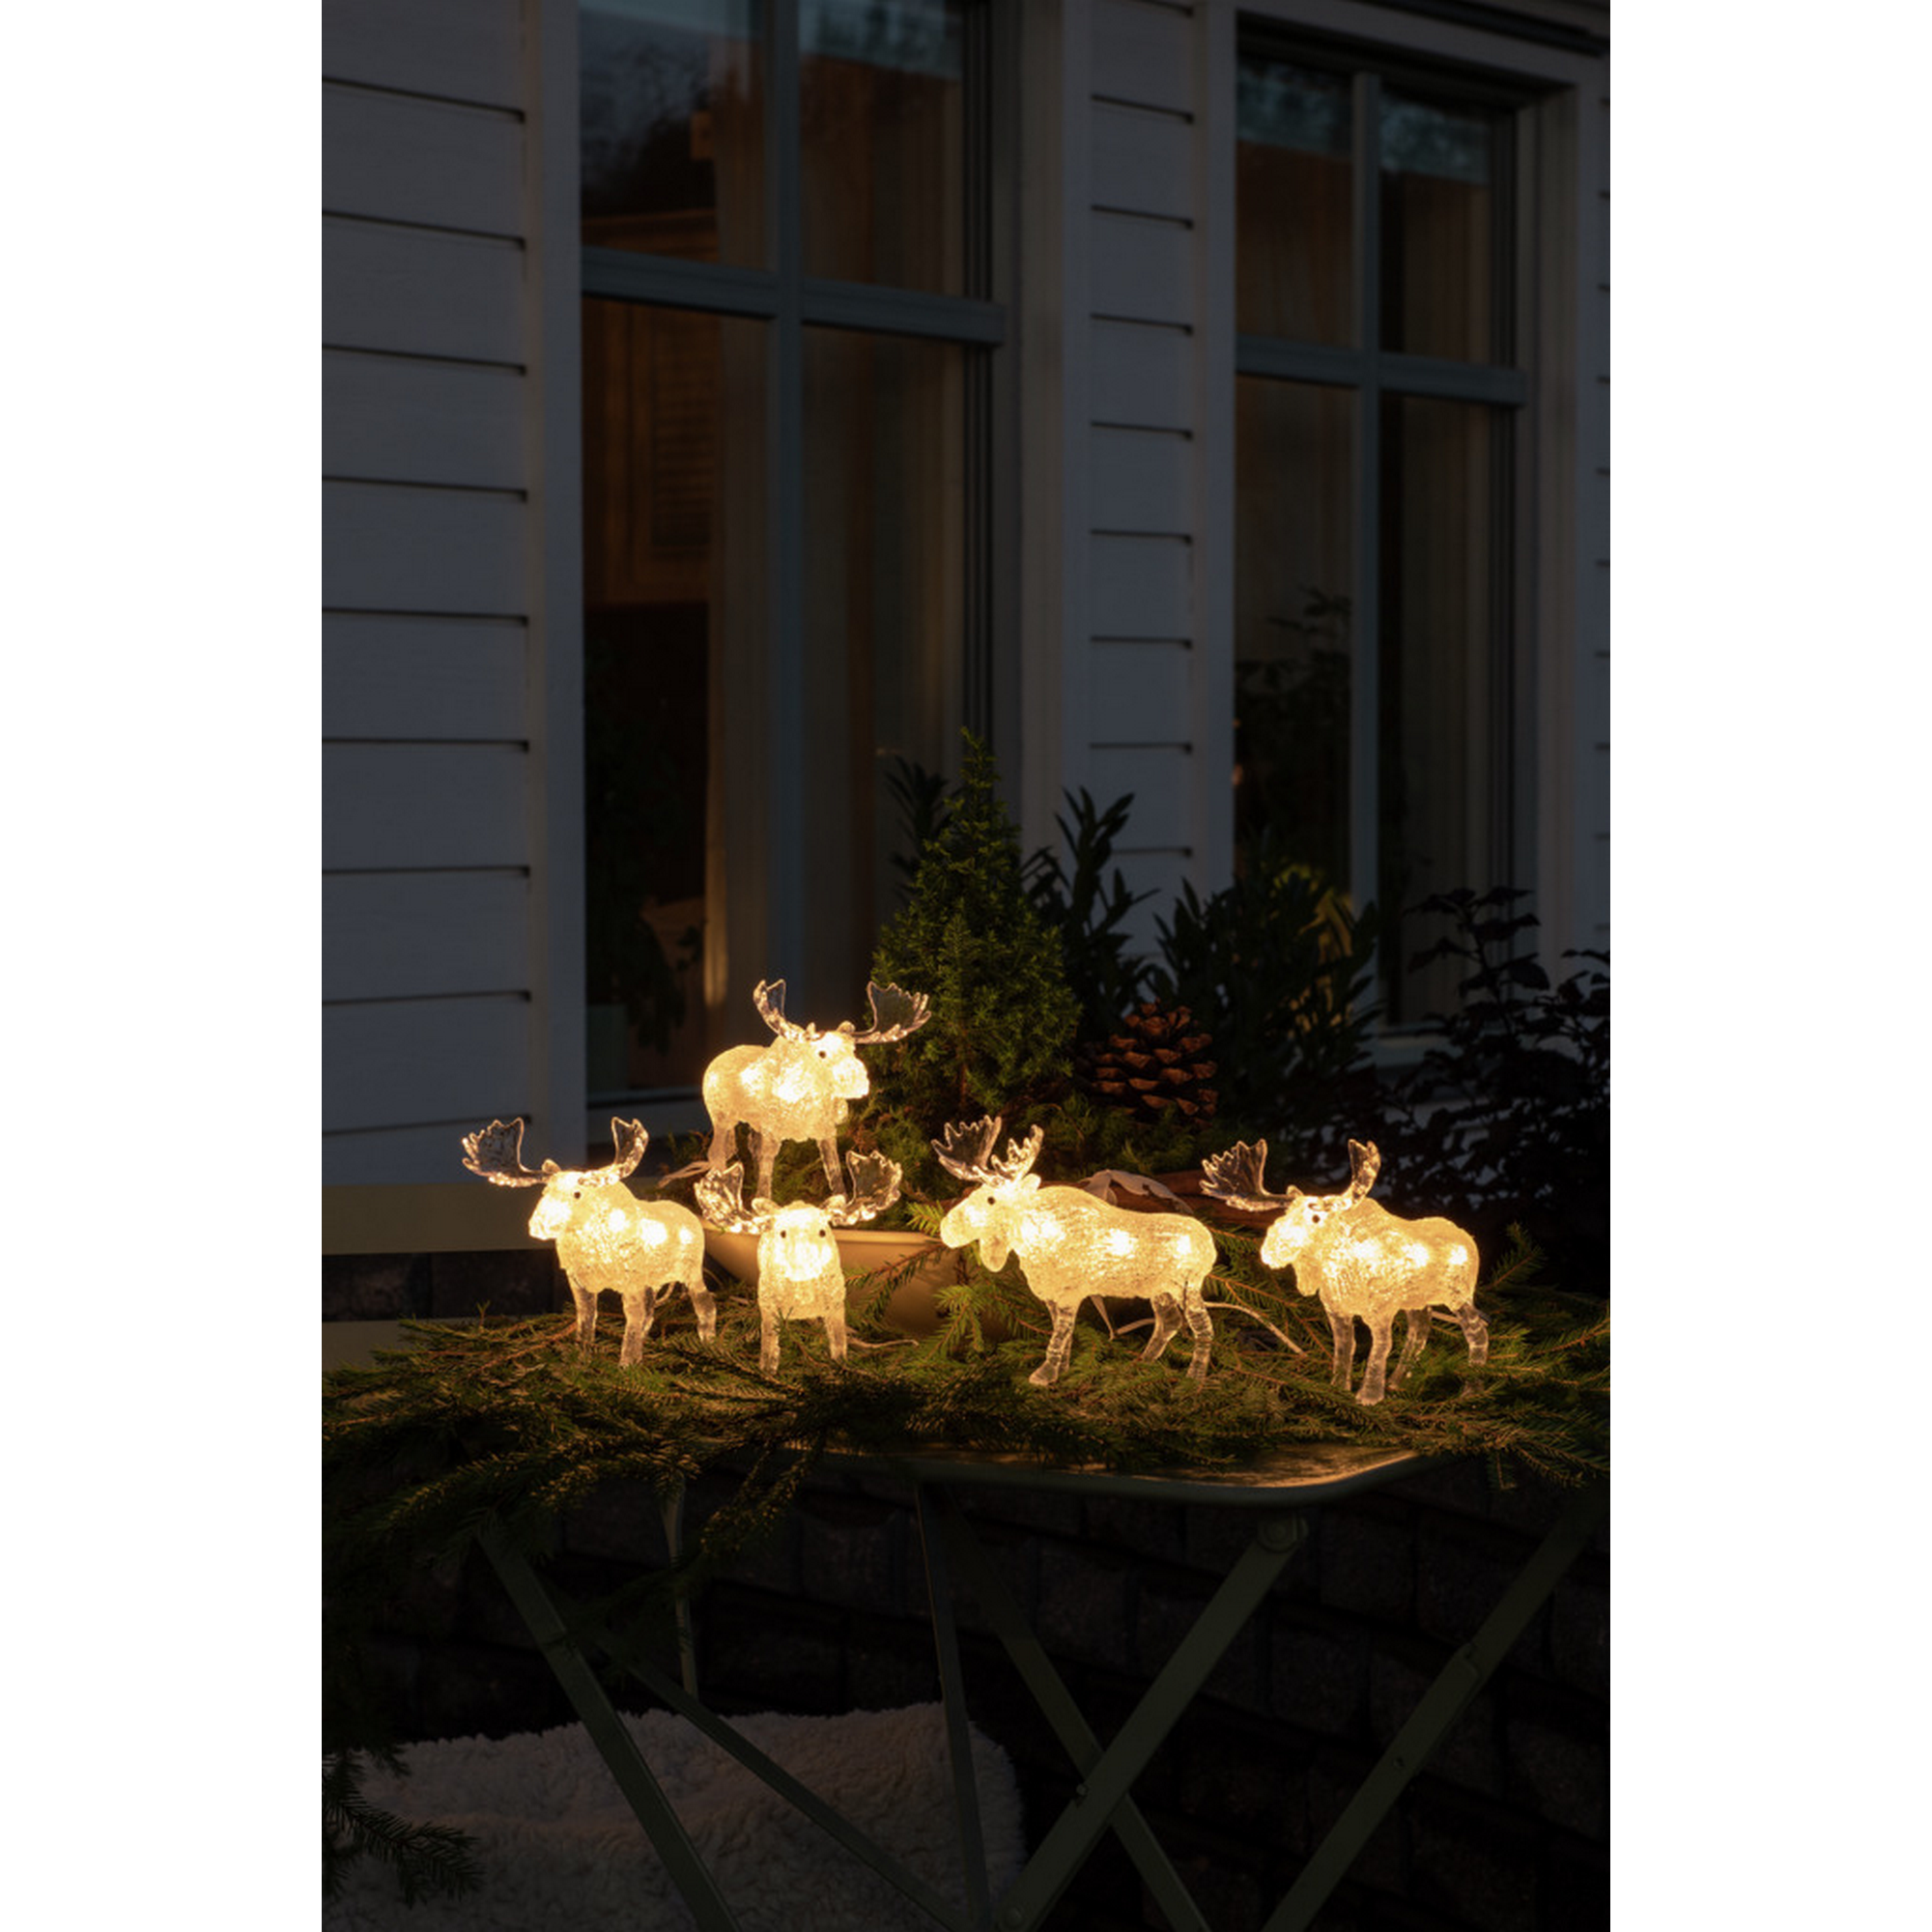 LED-Acryl 'Elche' 40 LEDs warmweiß 15,5 x 13 cm 5er-Set + product picture